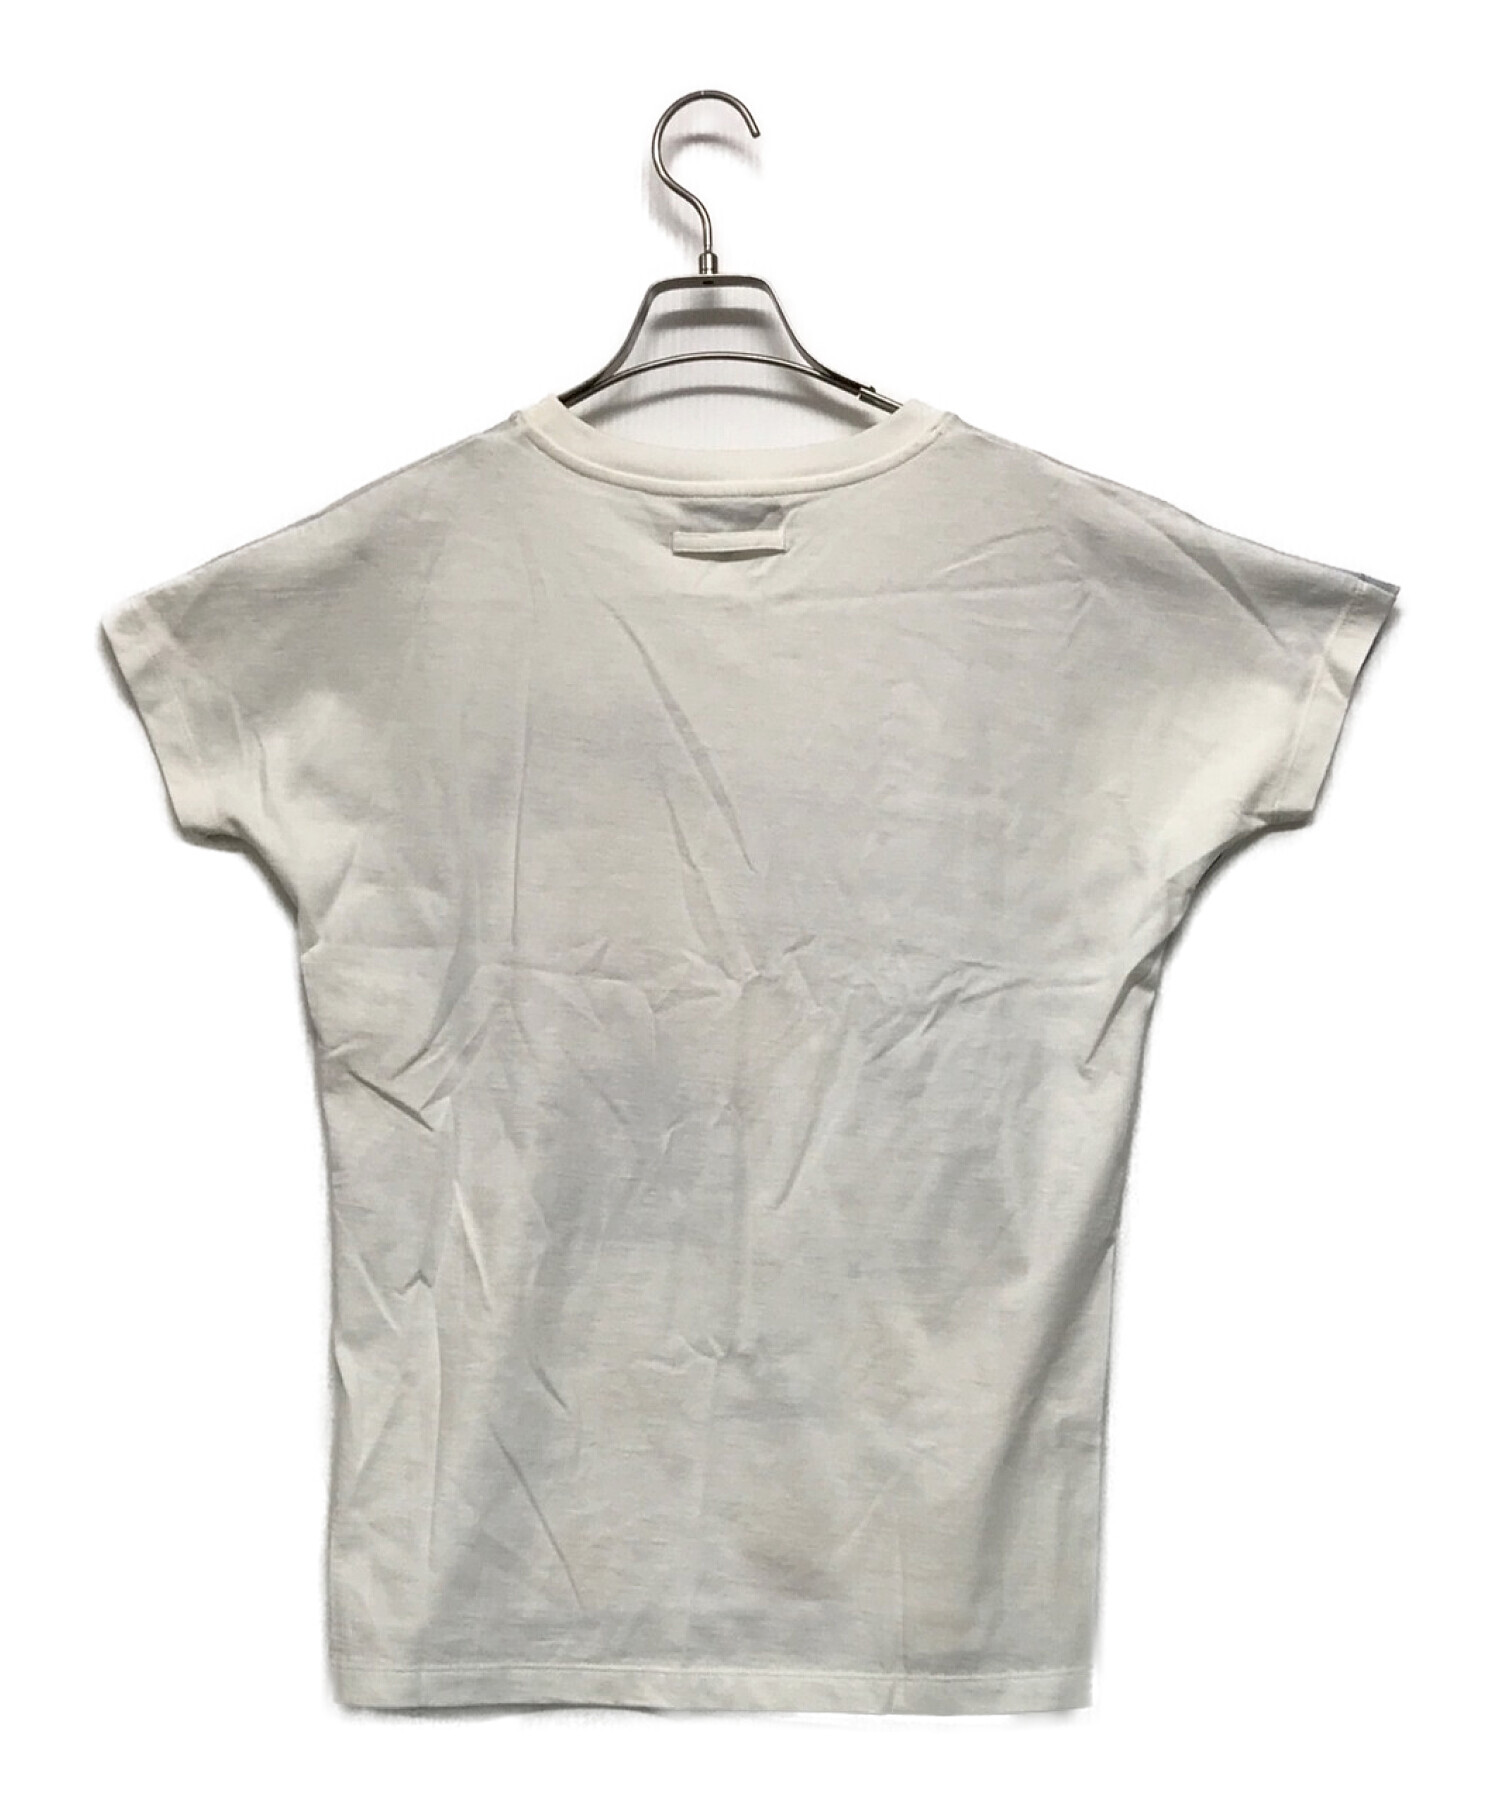 Jean Paul Gaultier HOMME ゴルチェ チェーン付きtシャツ購入希望です